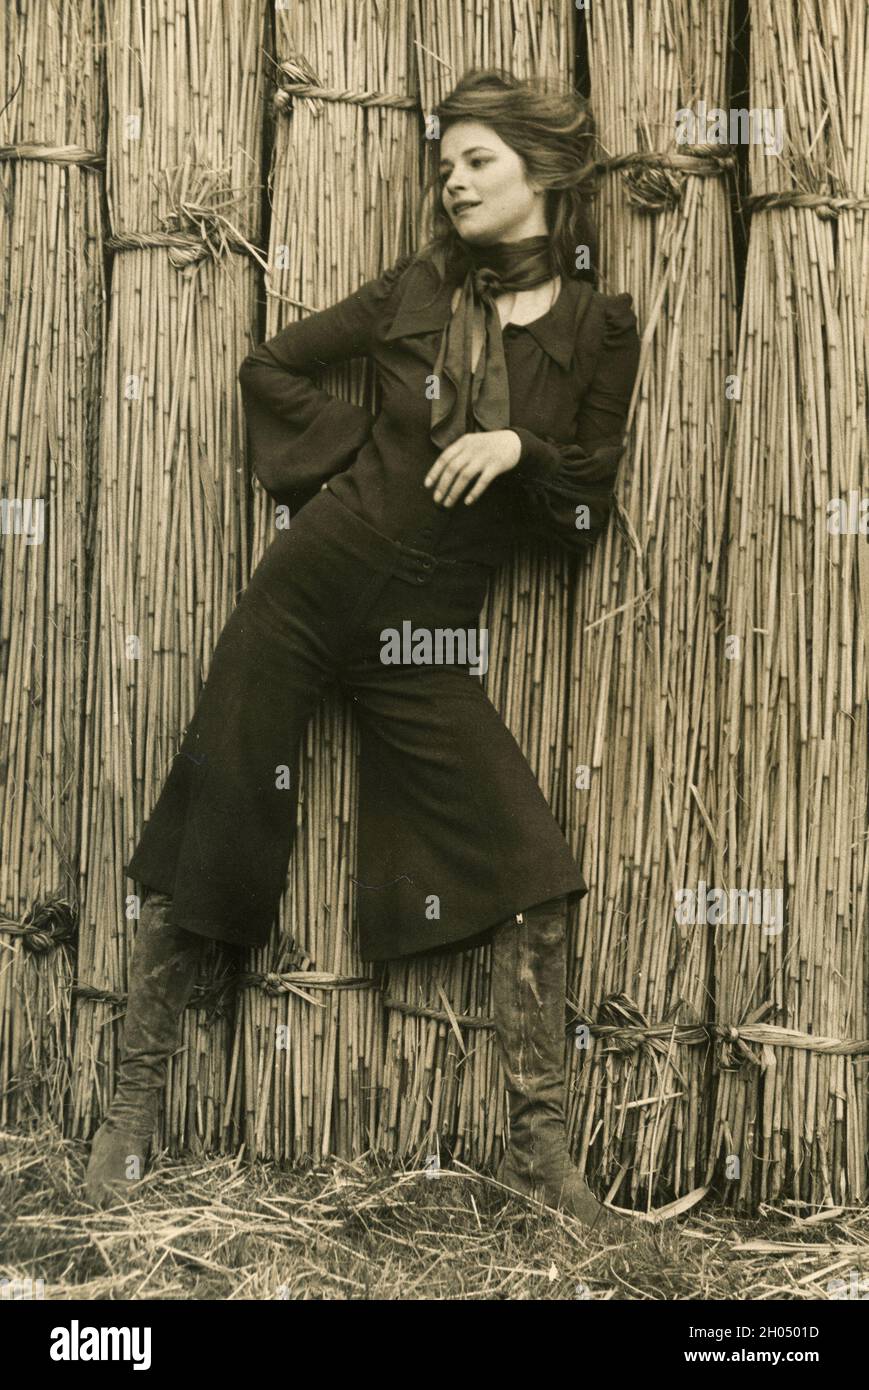 British actress, singer, and model Charlotte Rampling, 1970s Stock Photo